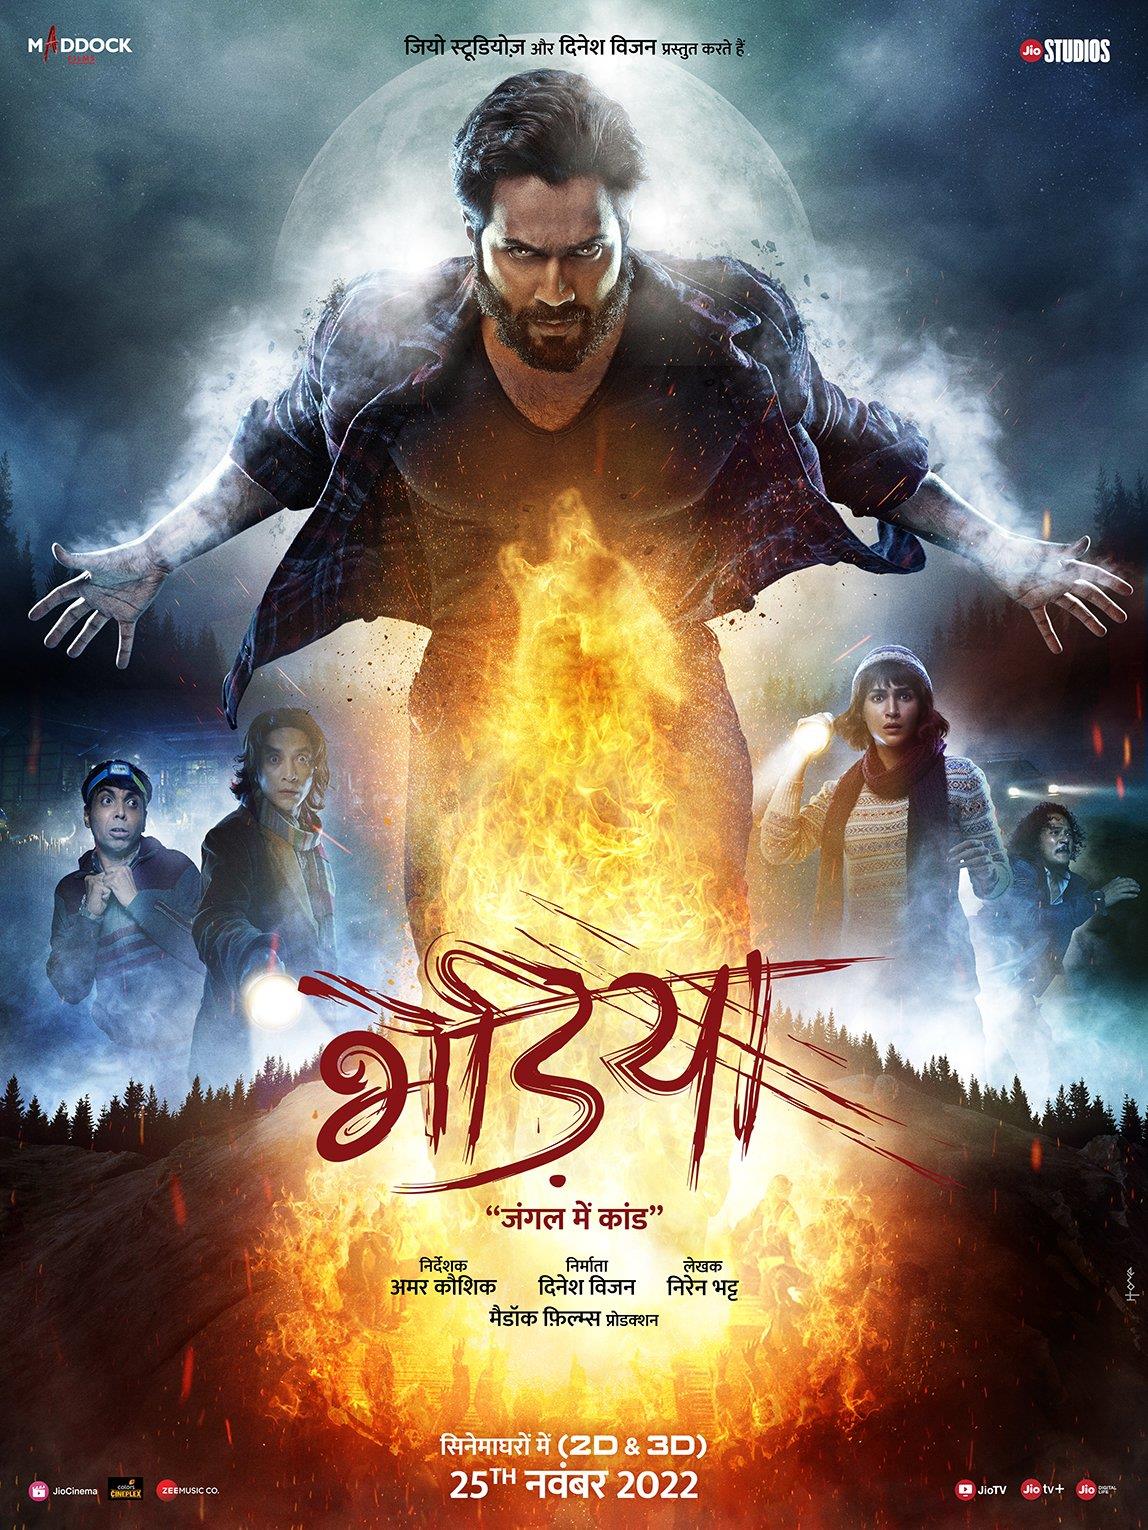 Varun Dhawan reveals his fierce werewolf avatar in new poster for 'Bhediya'  co-starring Kriti Sanon : The Tribune India